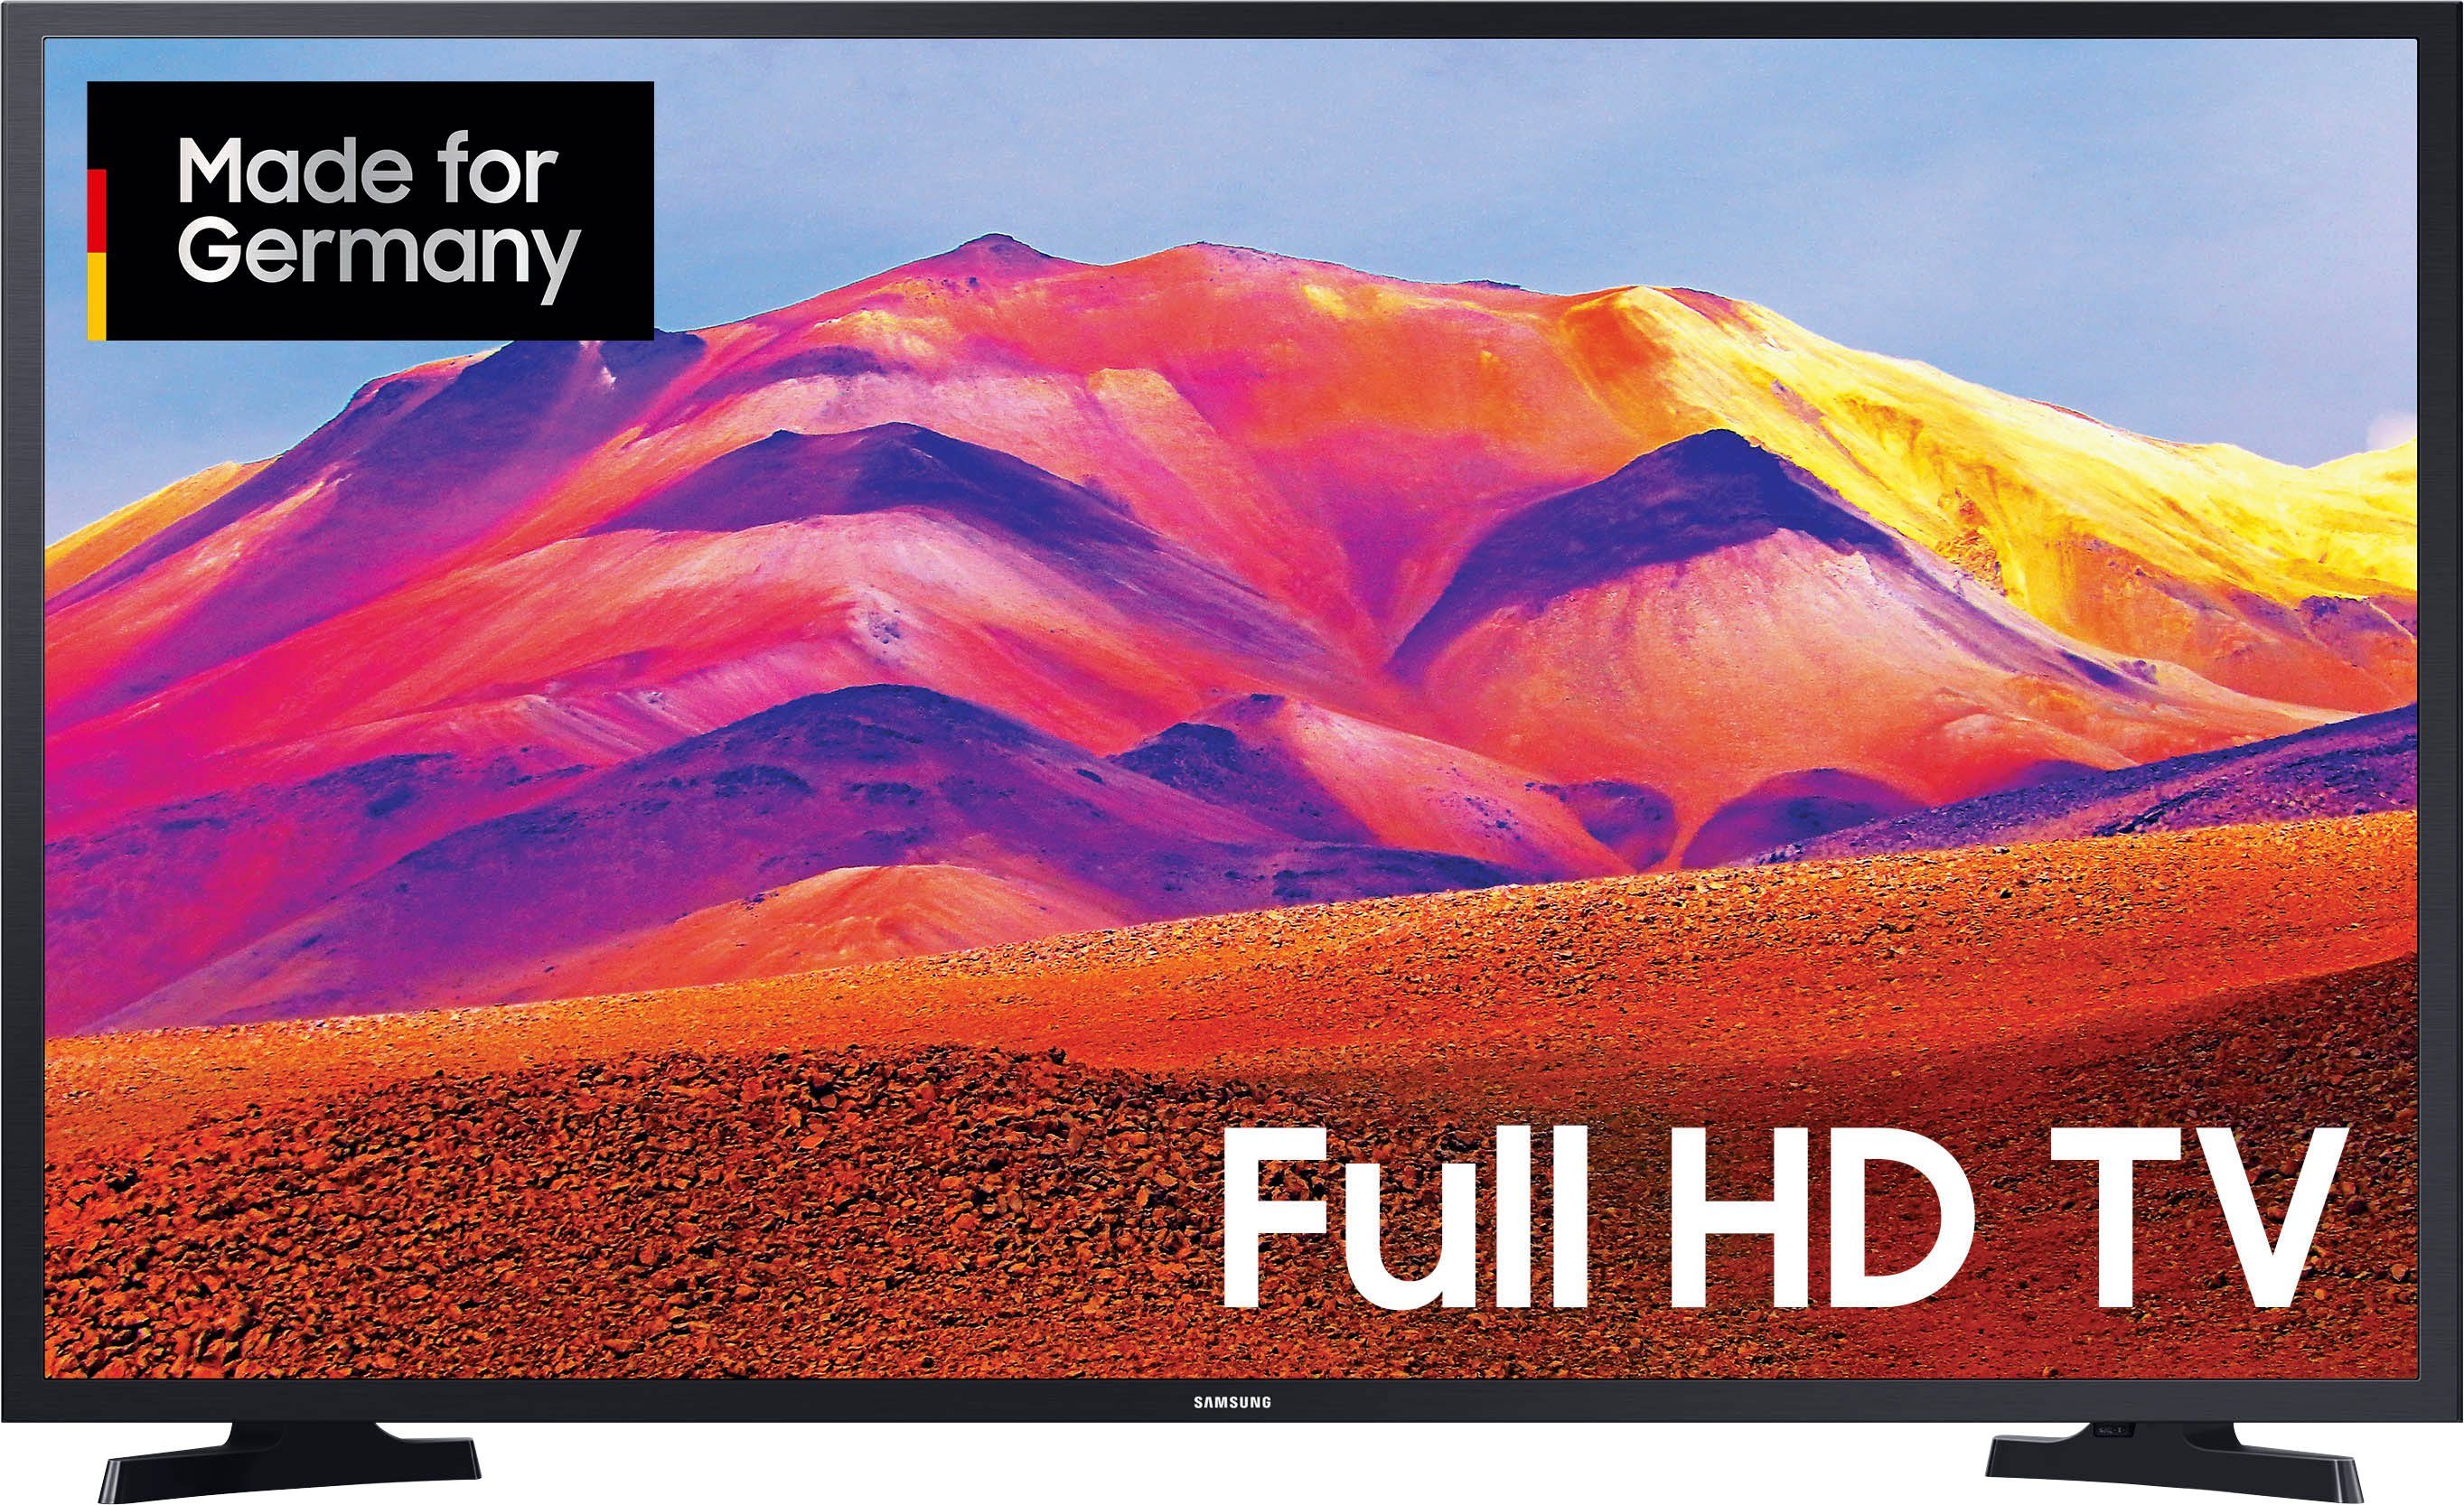 Smart-TV, LED-Fernseher (80 Samsung GU32T5379CD Enhancer) PurColor,HDR,Contrast Zoll, cm/32